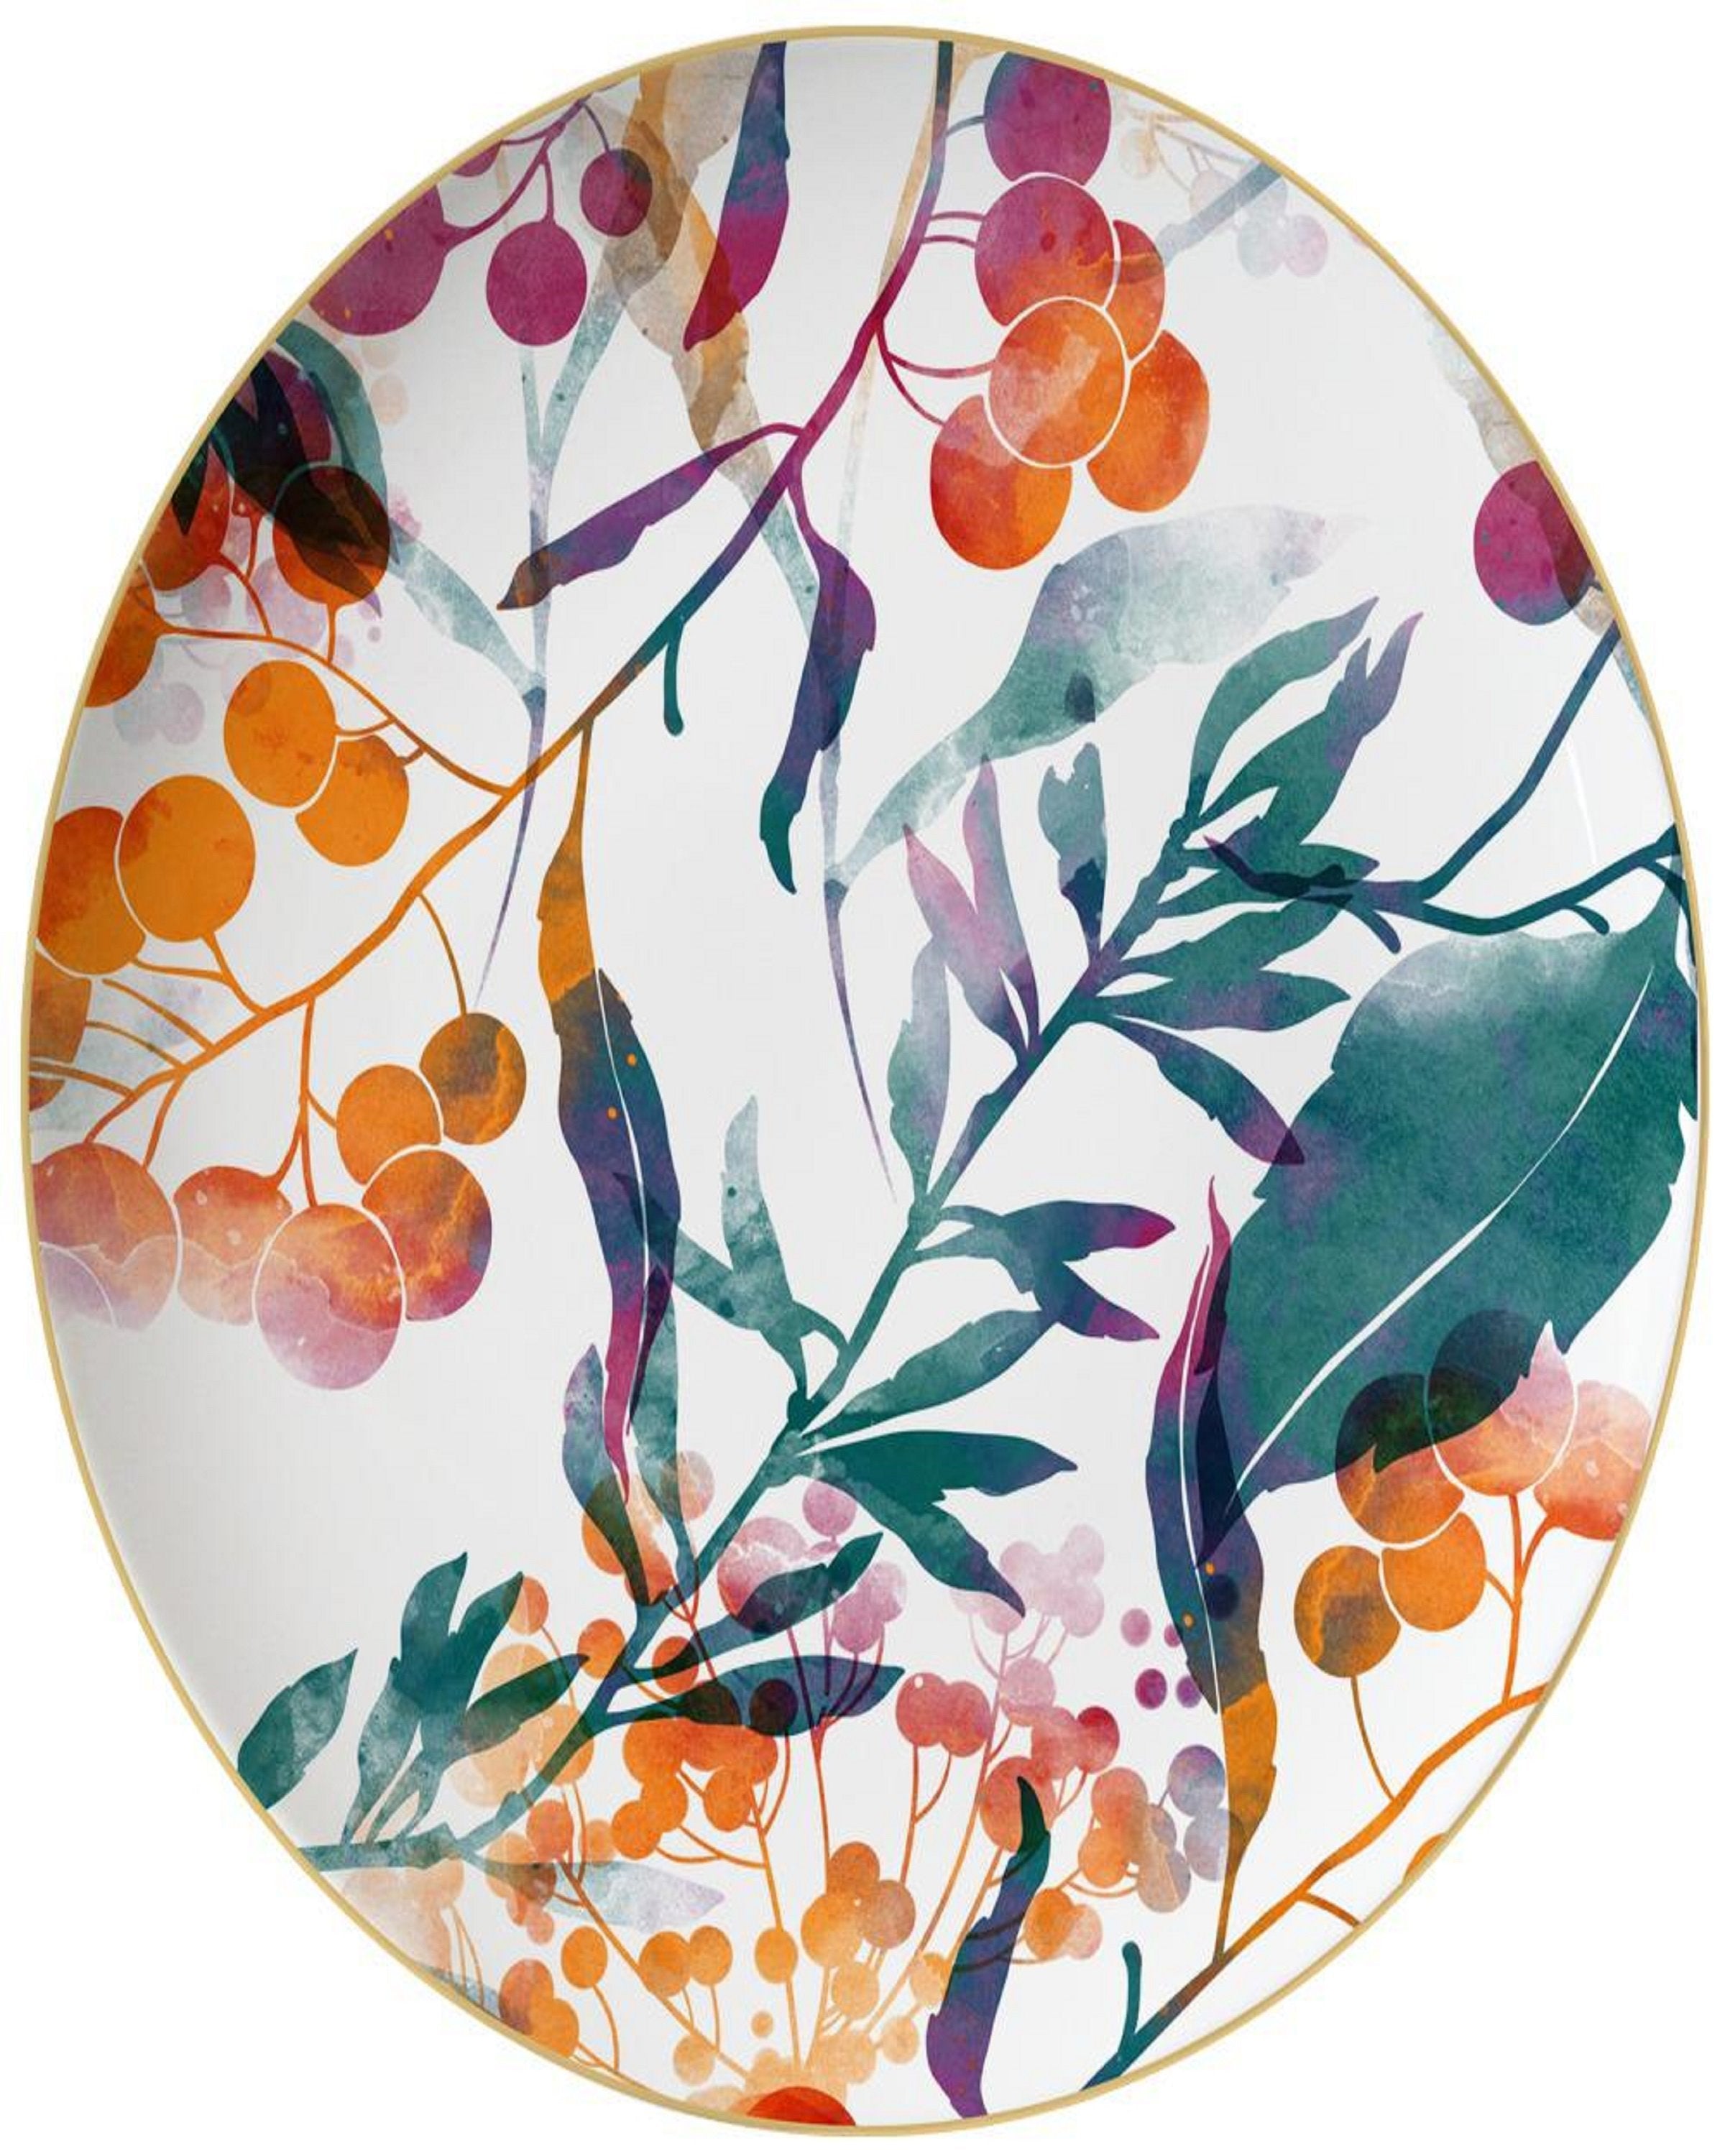 Colorful Ceramic Dinner Plates Online